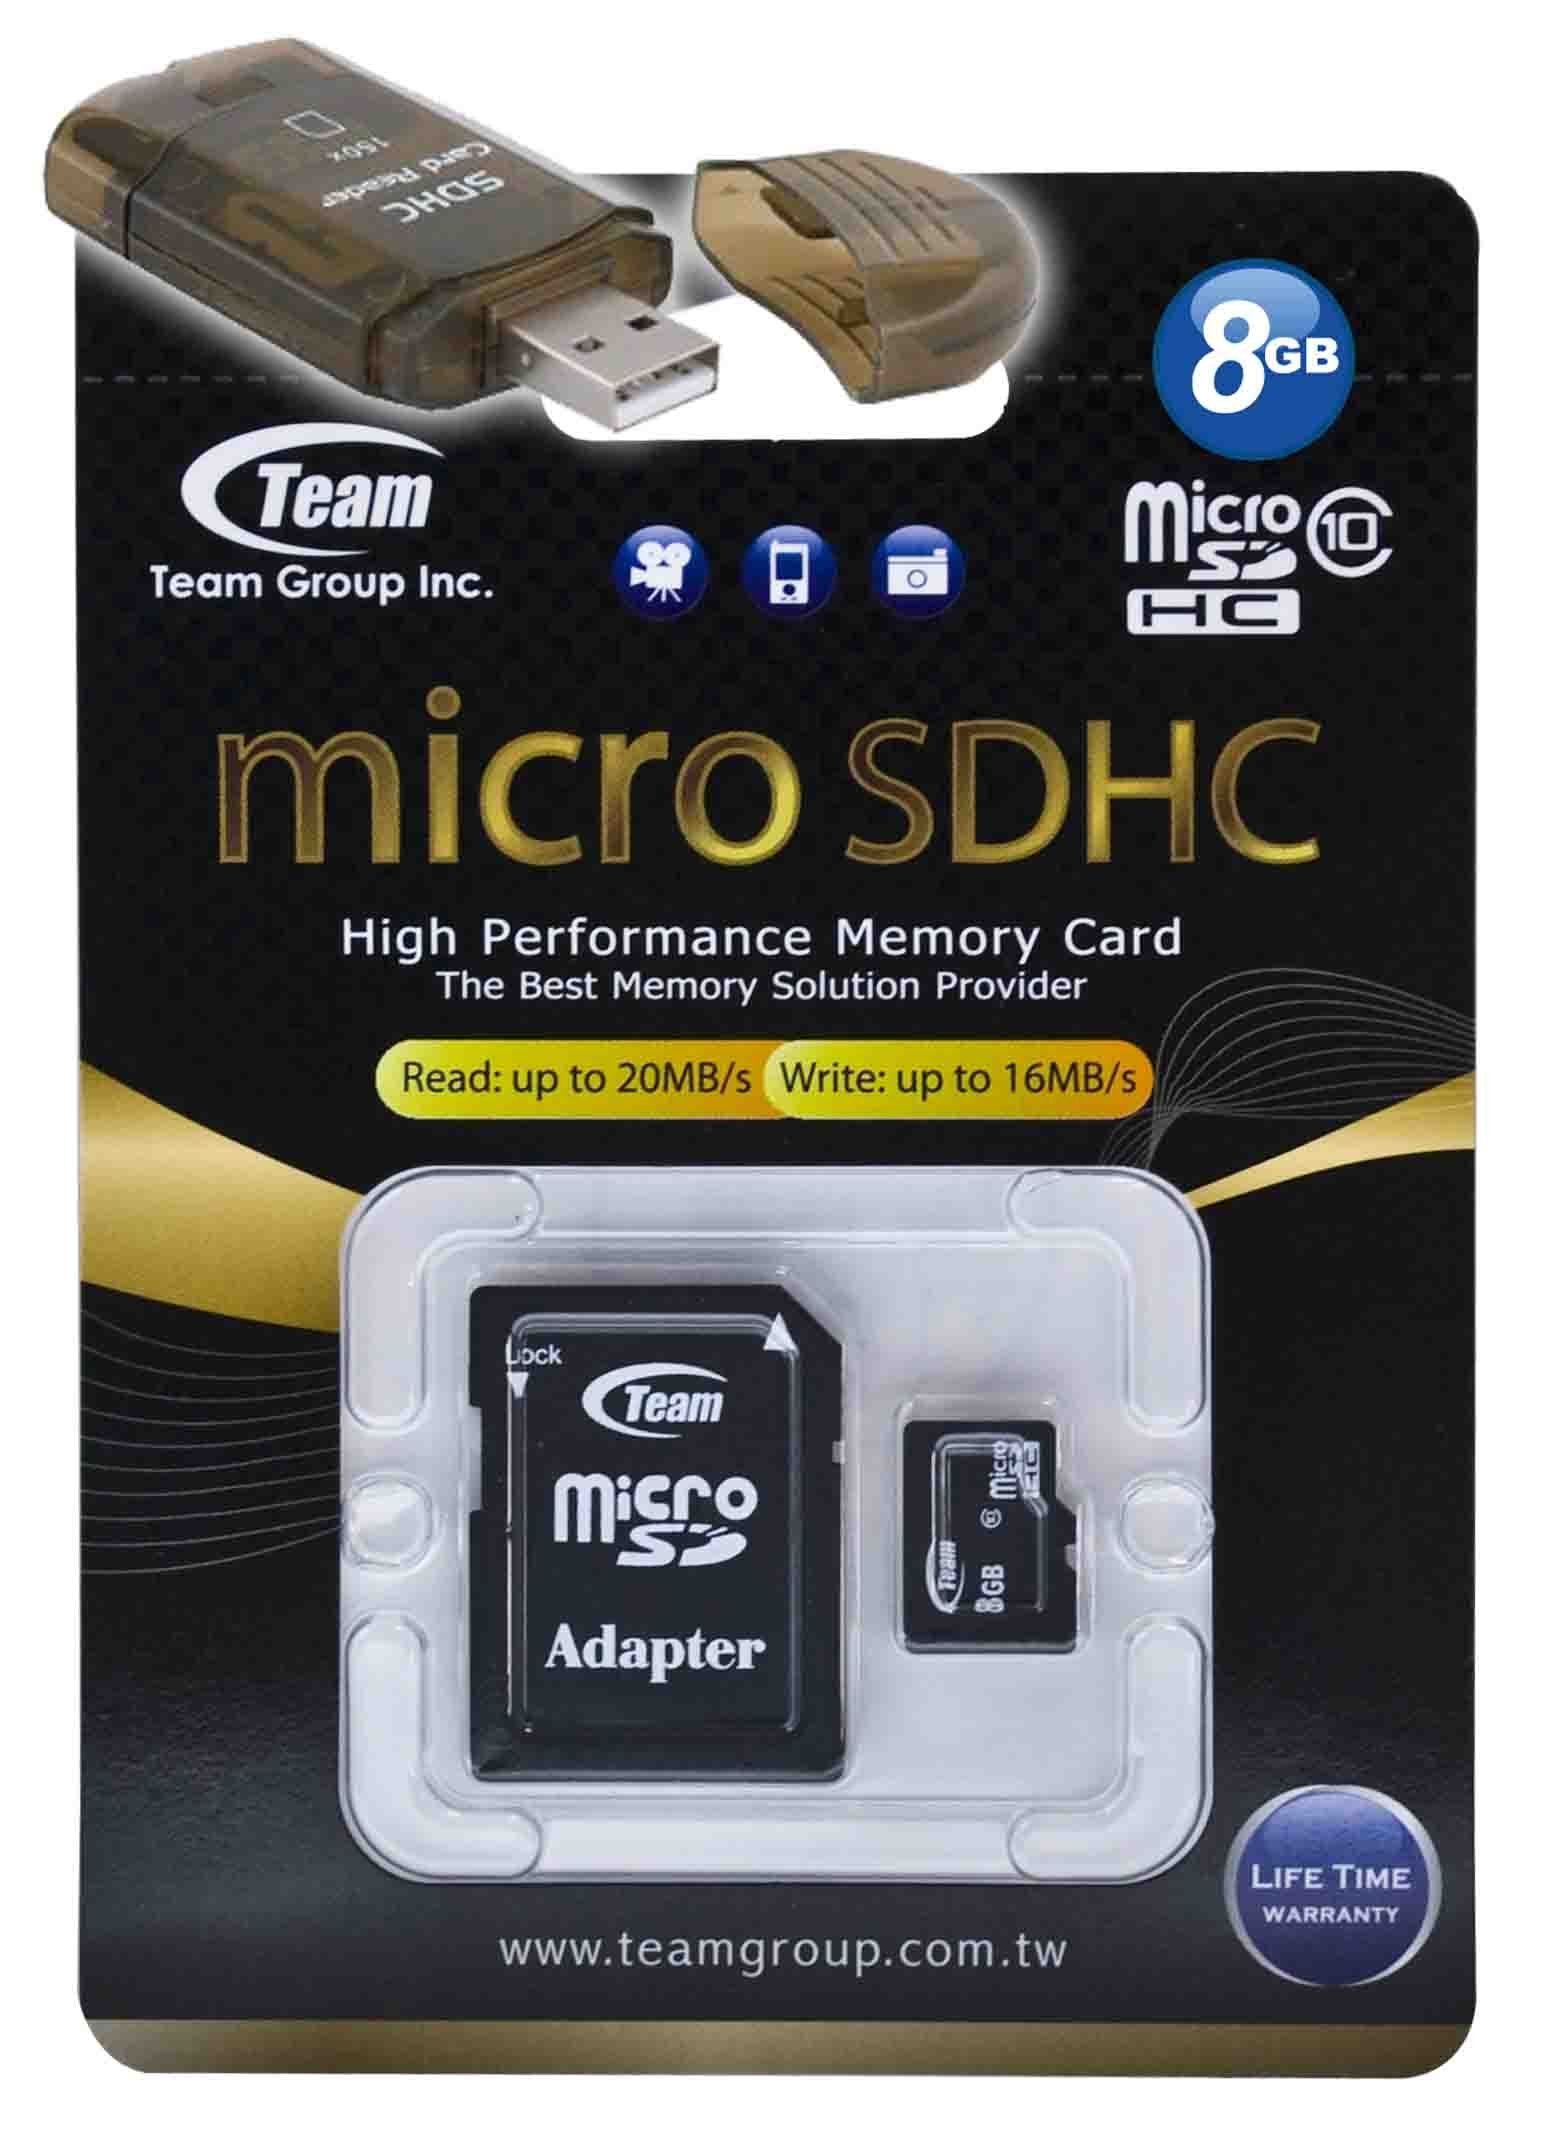 8GB Class 10 MicroSDHC Team High Speed 20MBSec Memory Card. Blazing Fast Card For LG CF360 UX565b phone. A free High Speed U